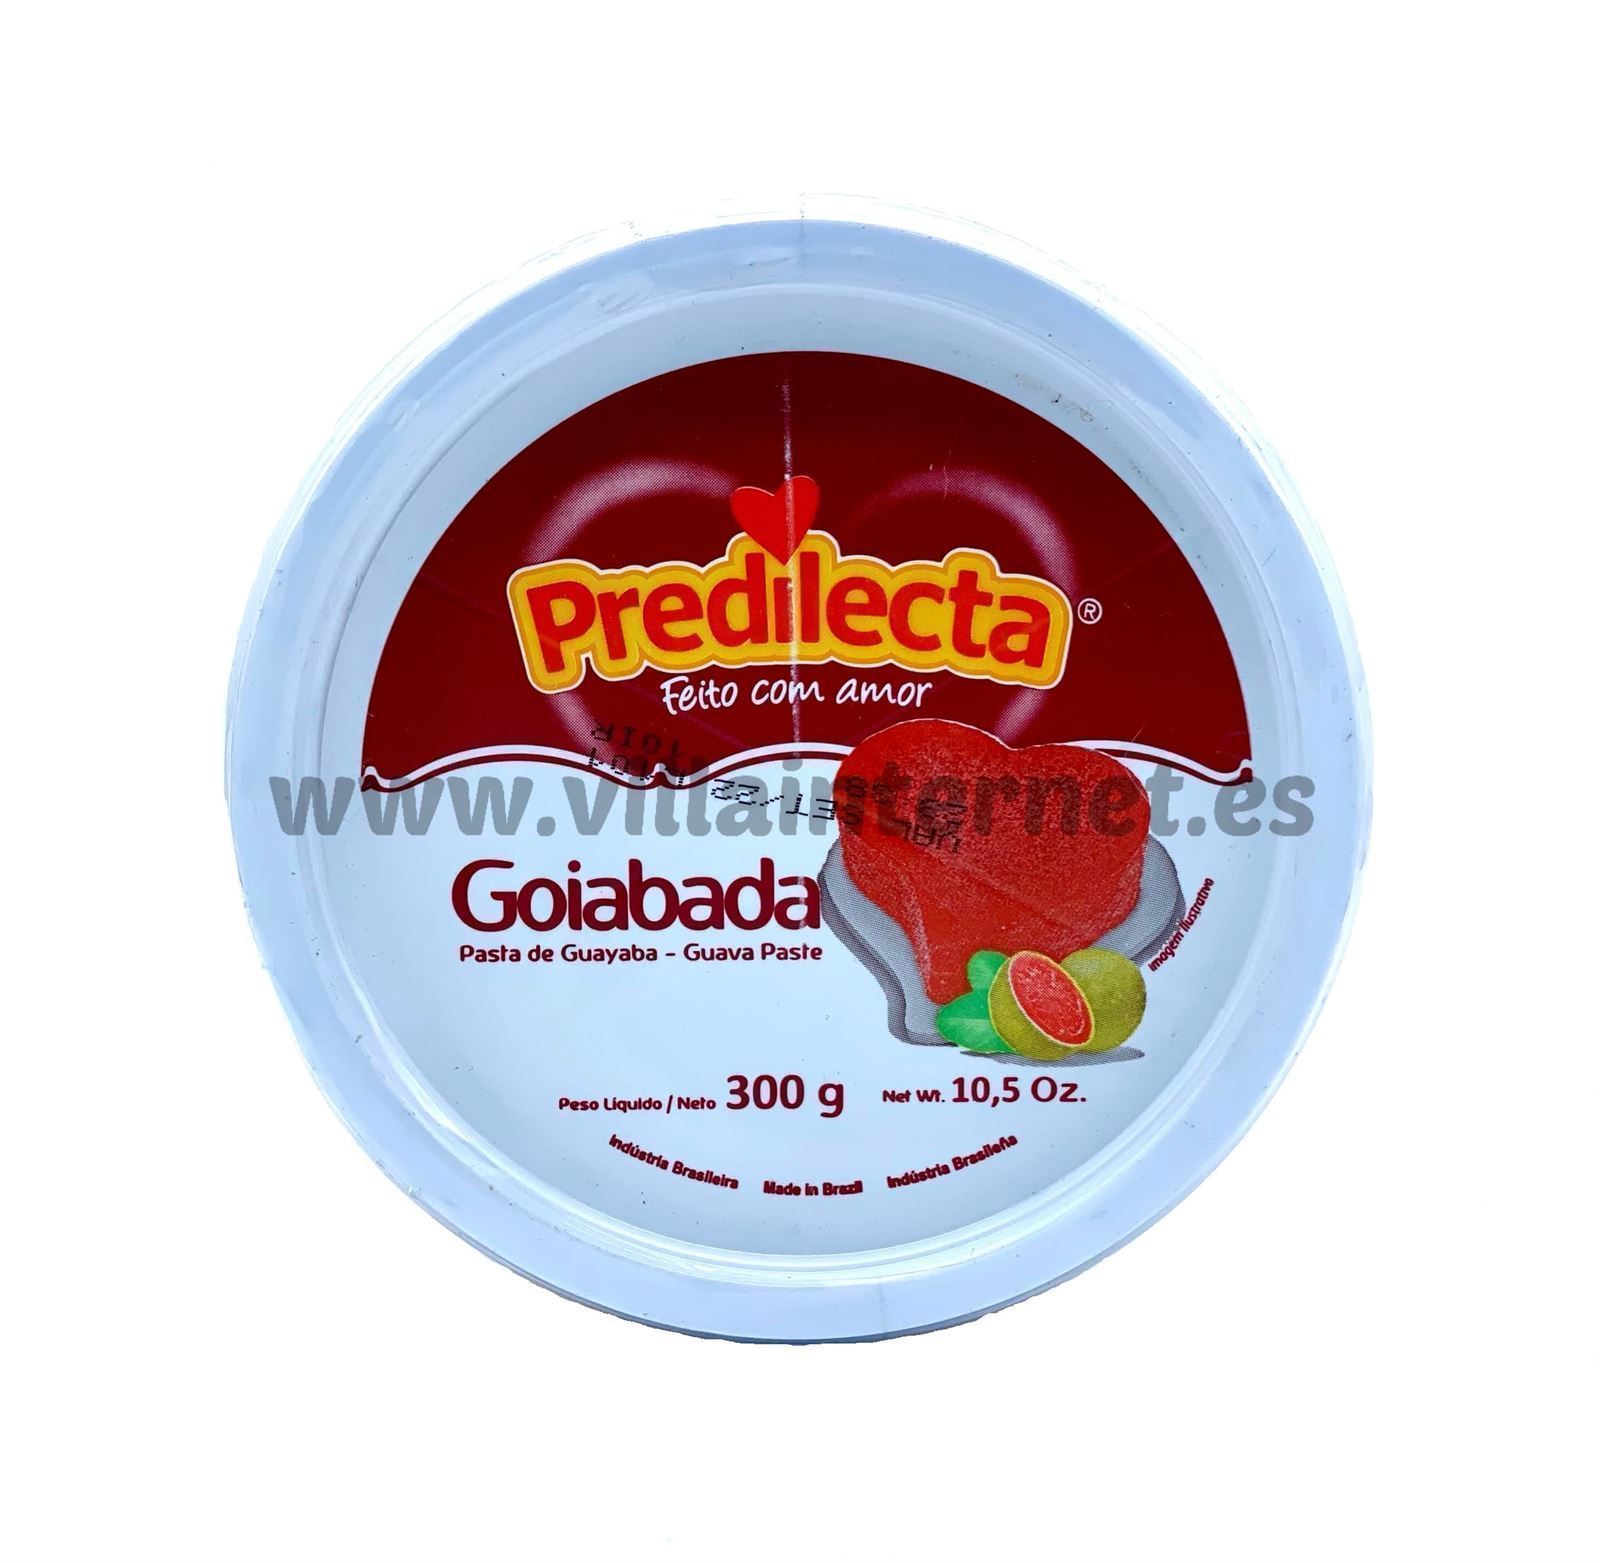 Pasta de guayaba Goiabada Predilecta 300g - Imagen 1